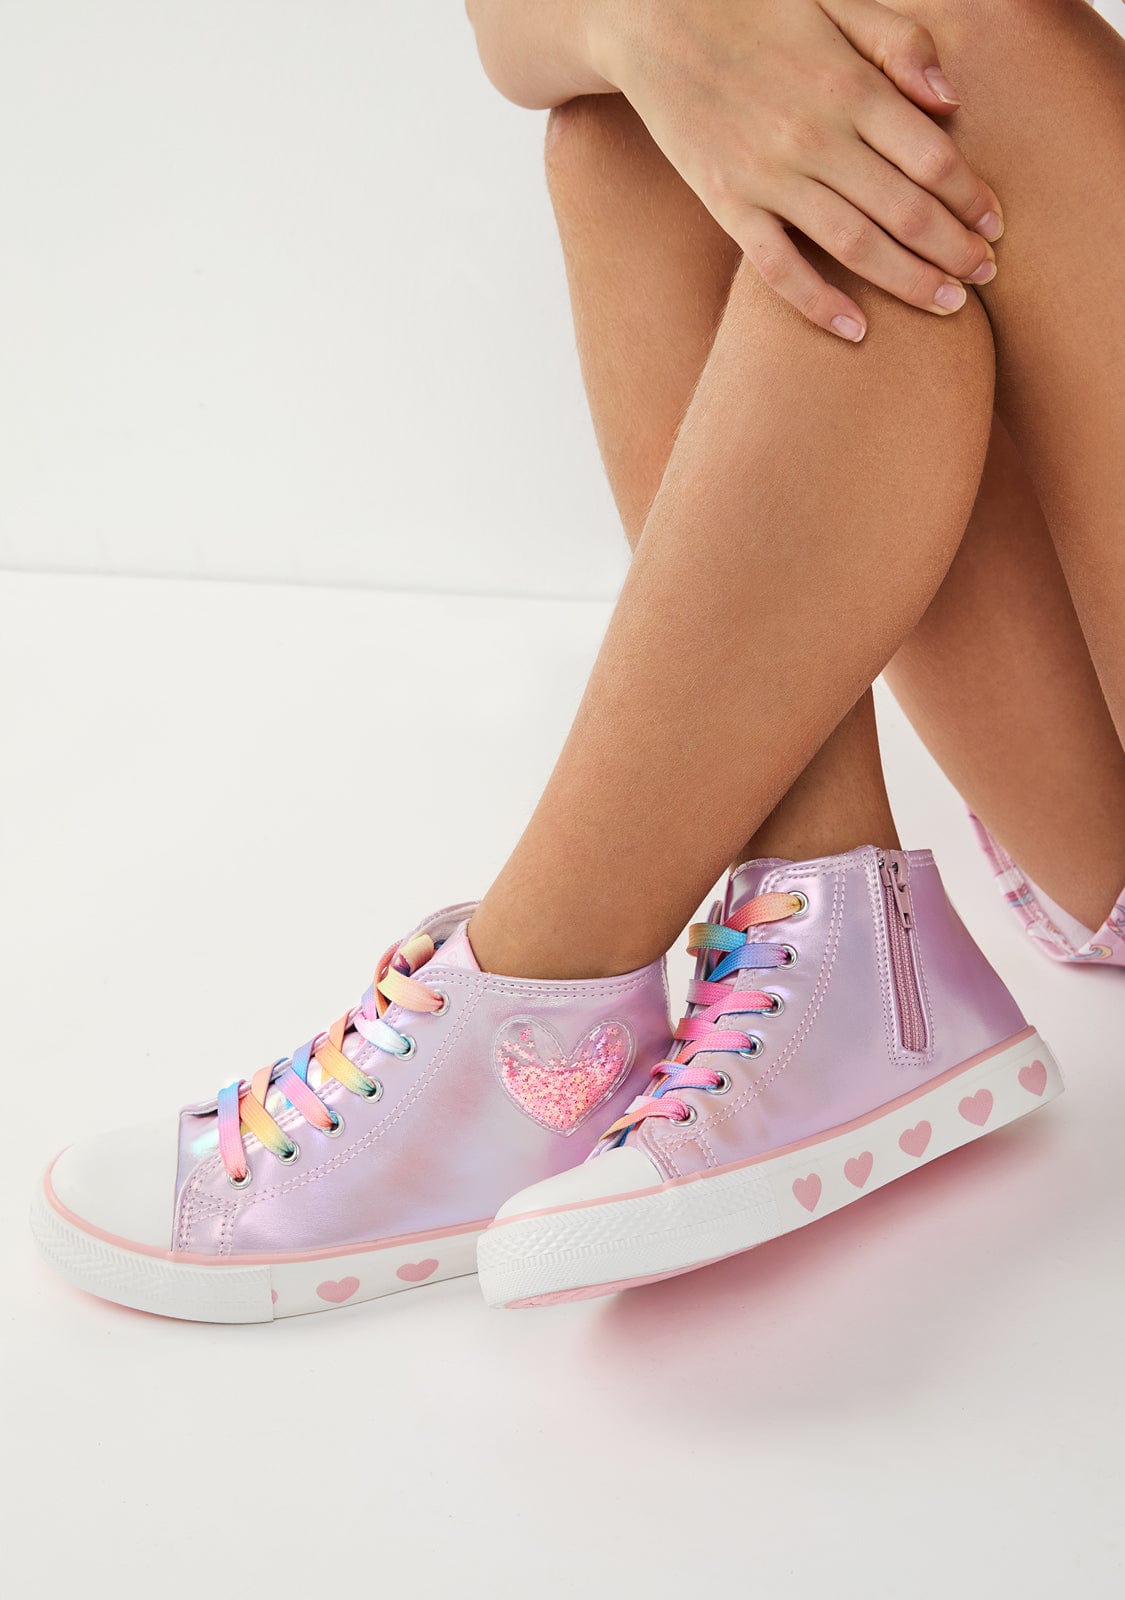 CONGUITOS Shoes Iridescent Pink Heart Hi-Top Sneakers